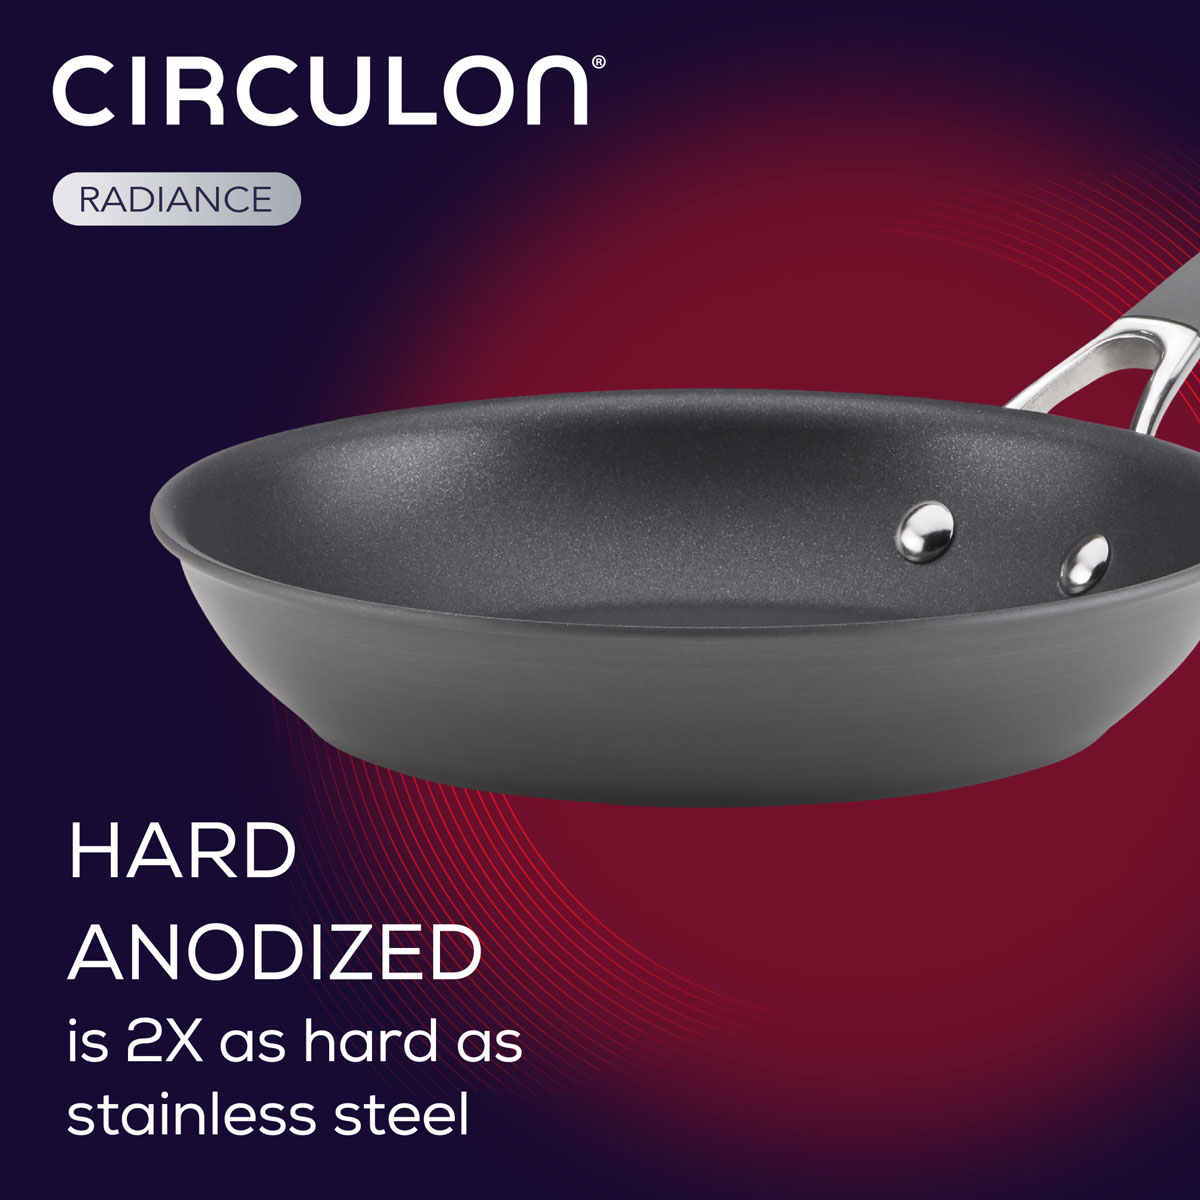 Circulon(R) Radiance 3pc. Hard-Anodized Non-Stick Frying Pan Set